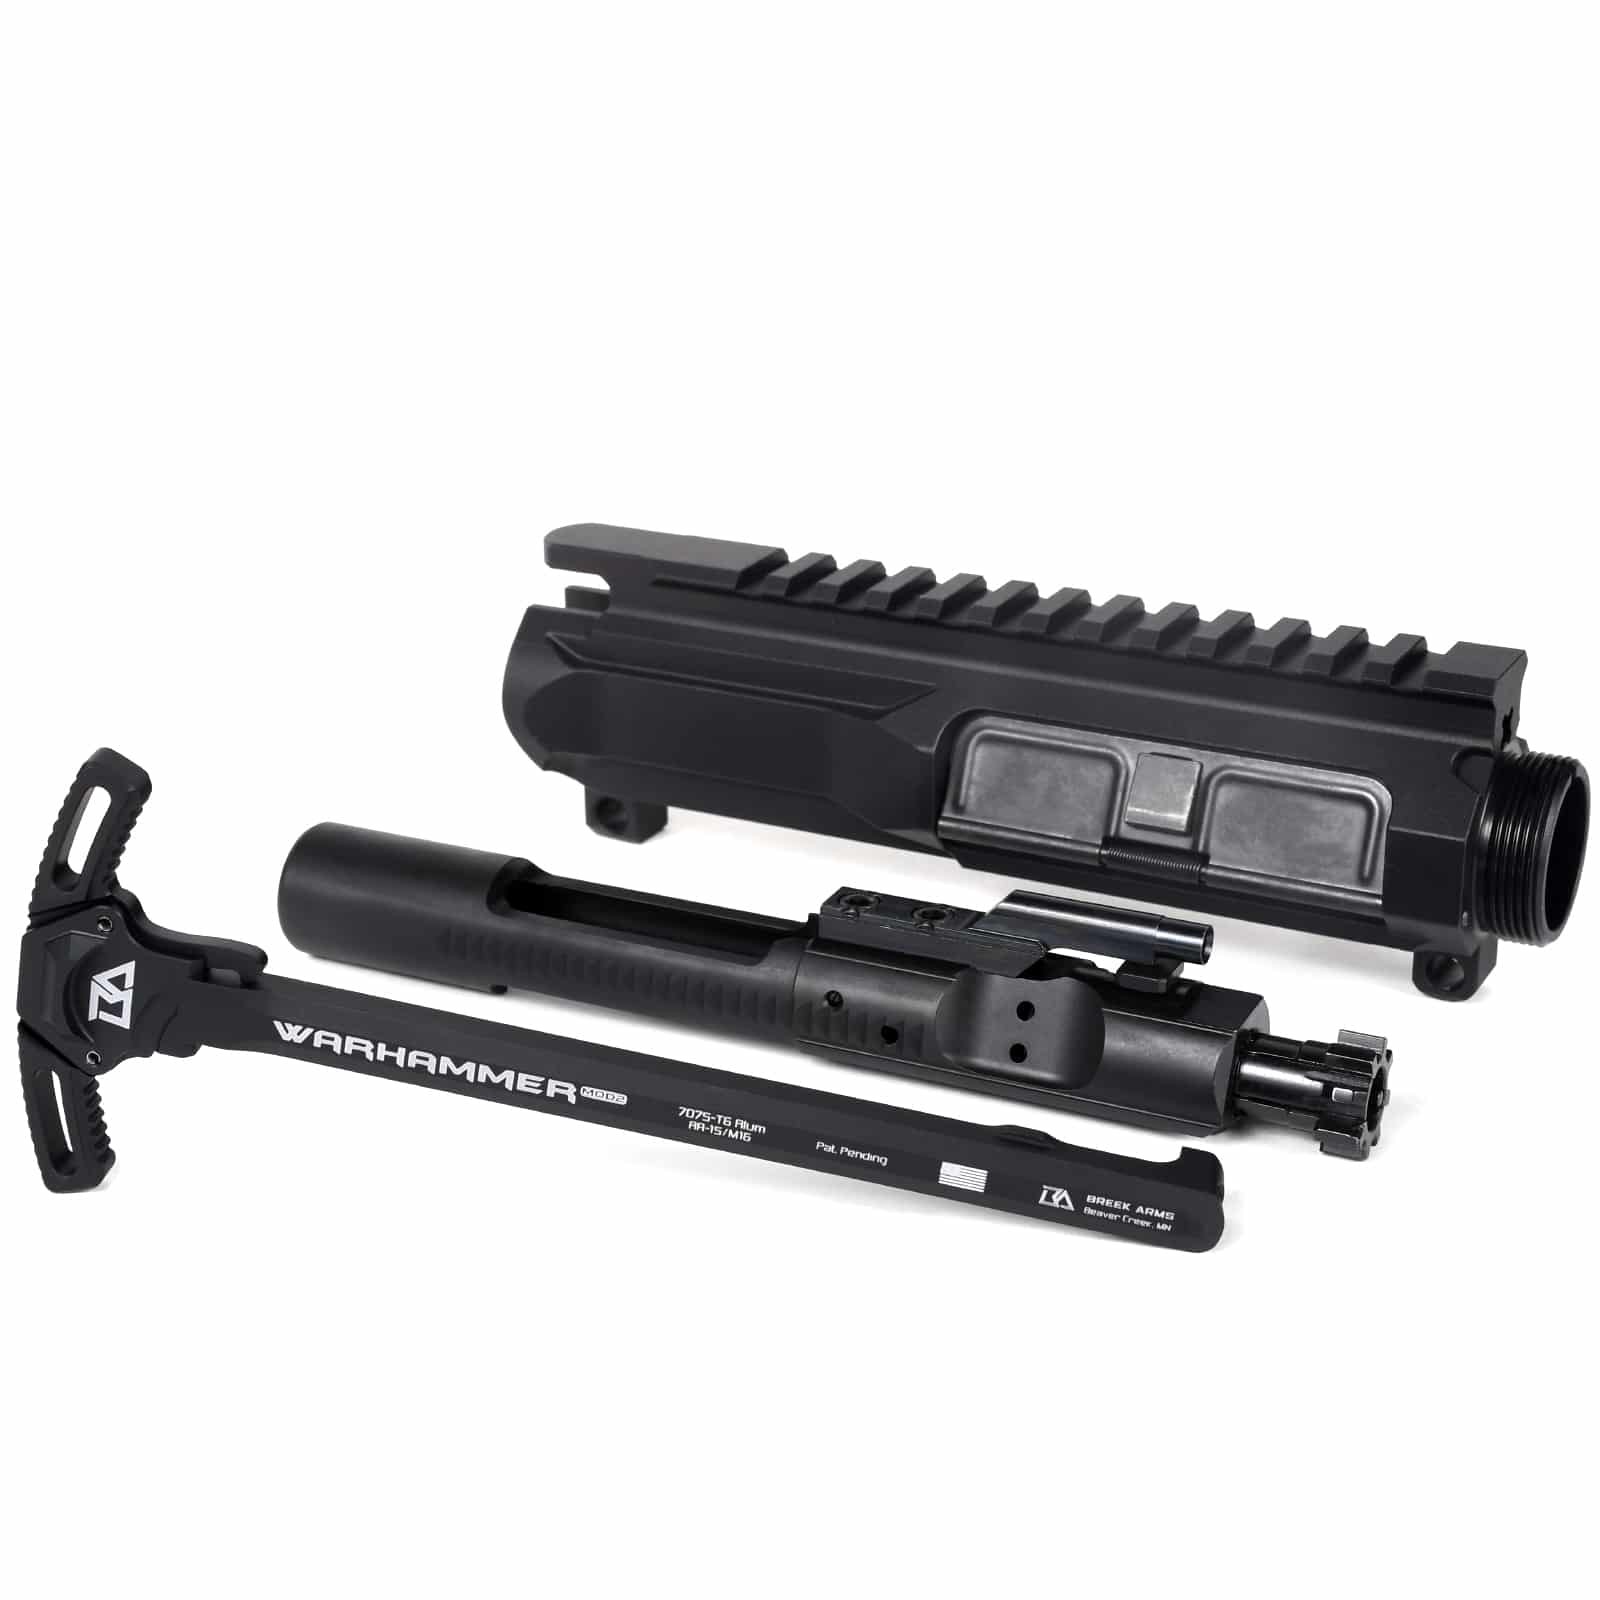 AT3 Upper Receiver Black + AT3 Bolt Carrier Group + Breek Arms Warhammer Charging Handle Kit for AR 15